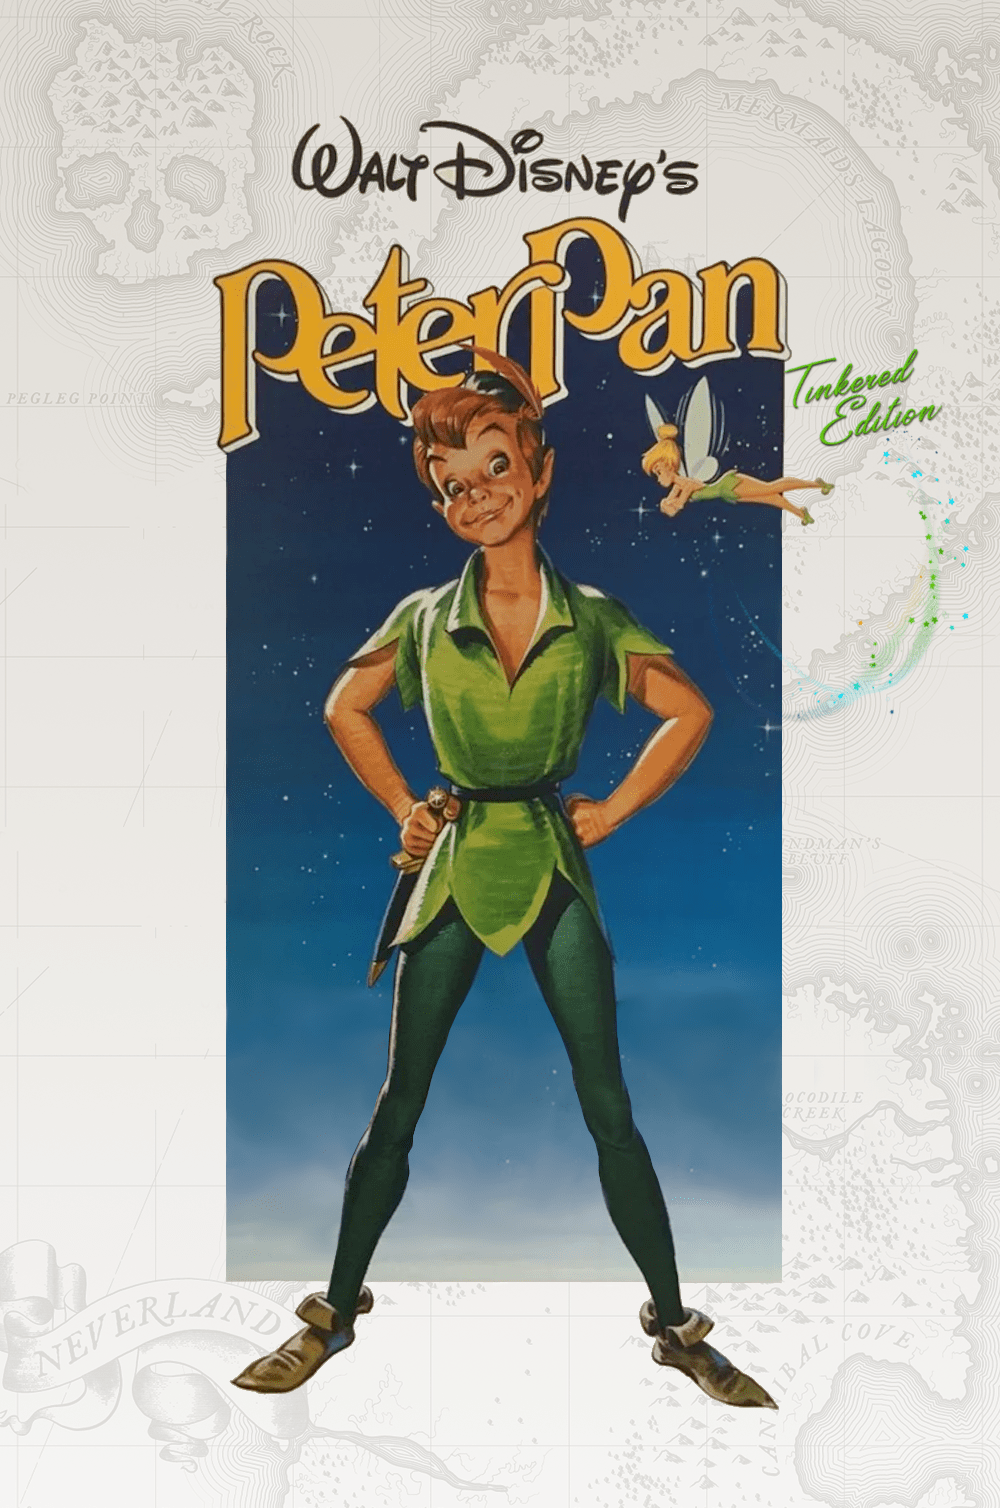 peter-pan-tinkered-edition-poster-7.png